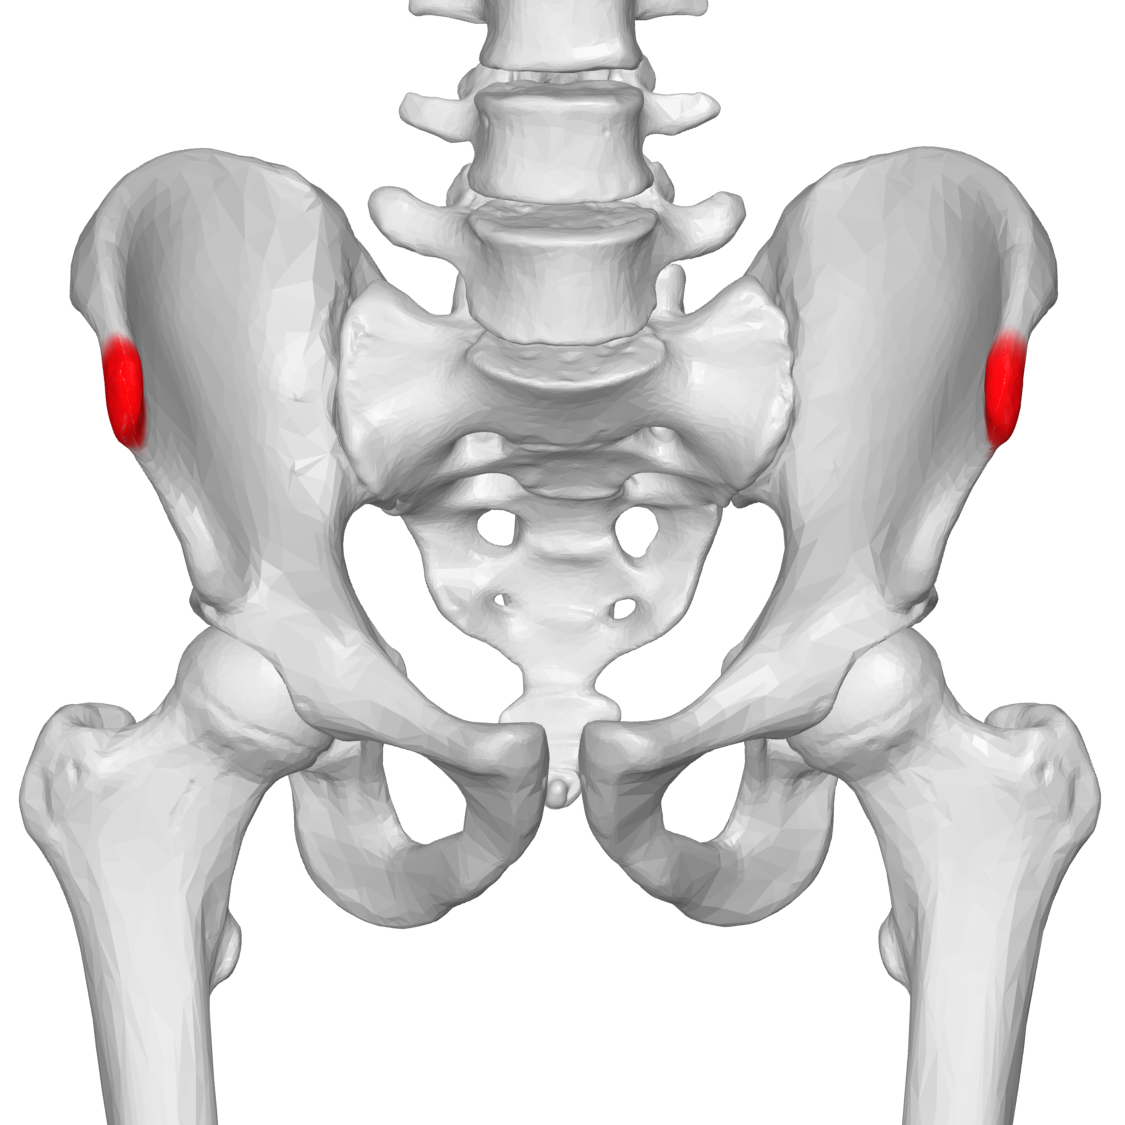 Asis anterior iliac Spine.. Лобковая кость анатомия на скелете. Кости таза анатомия подвздошная кость. Тазовая кость подвздошная кость.